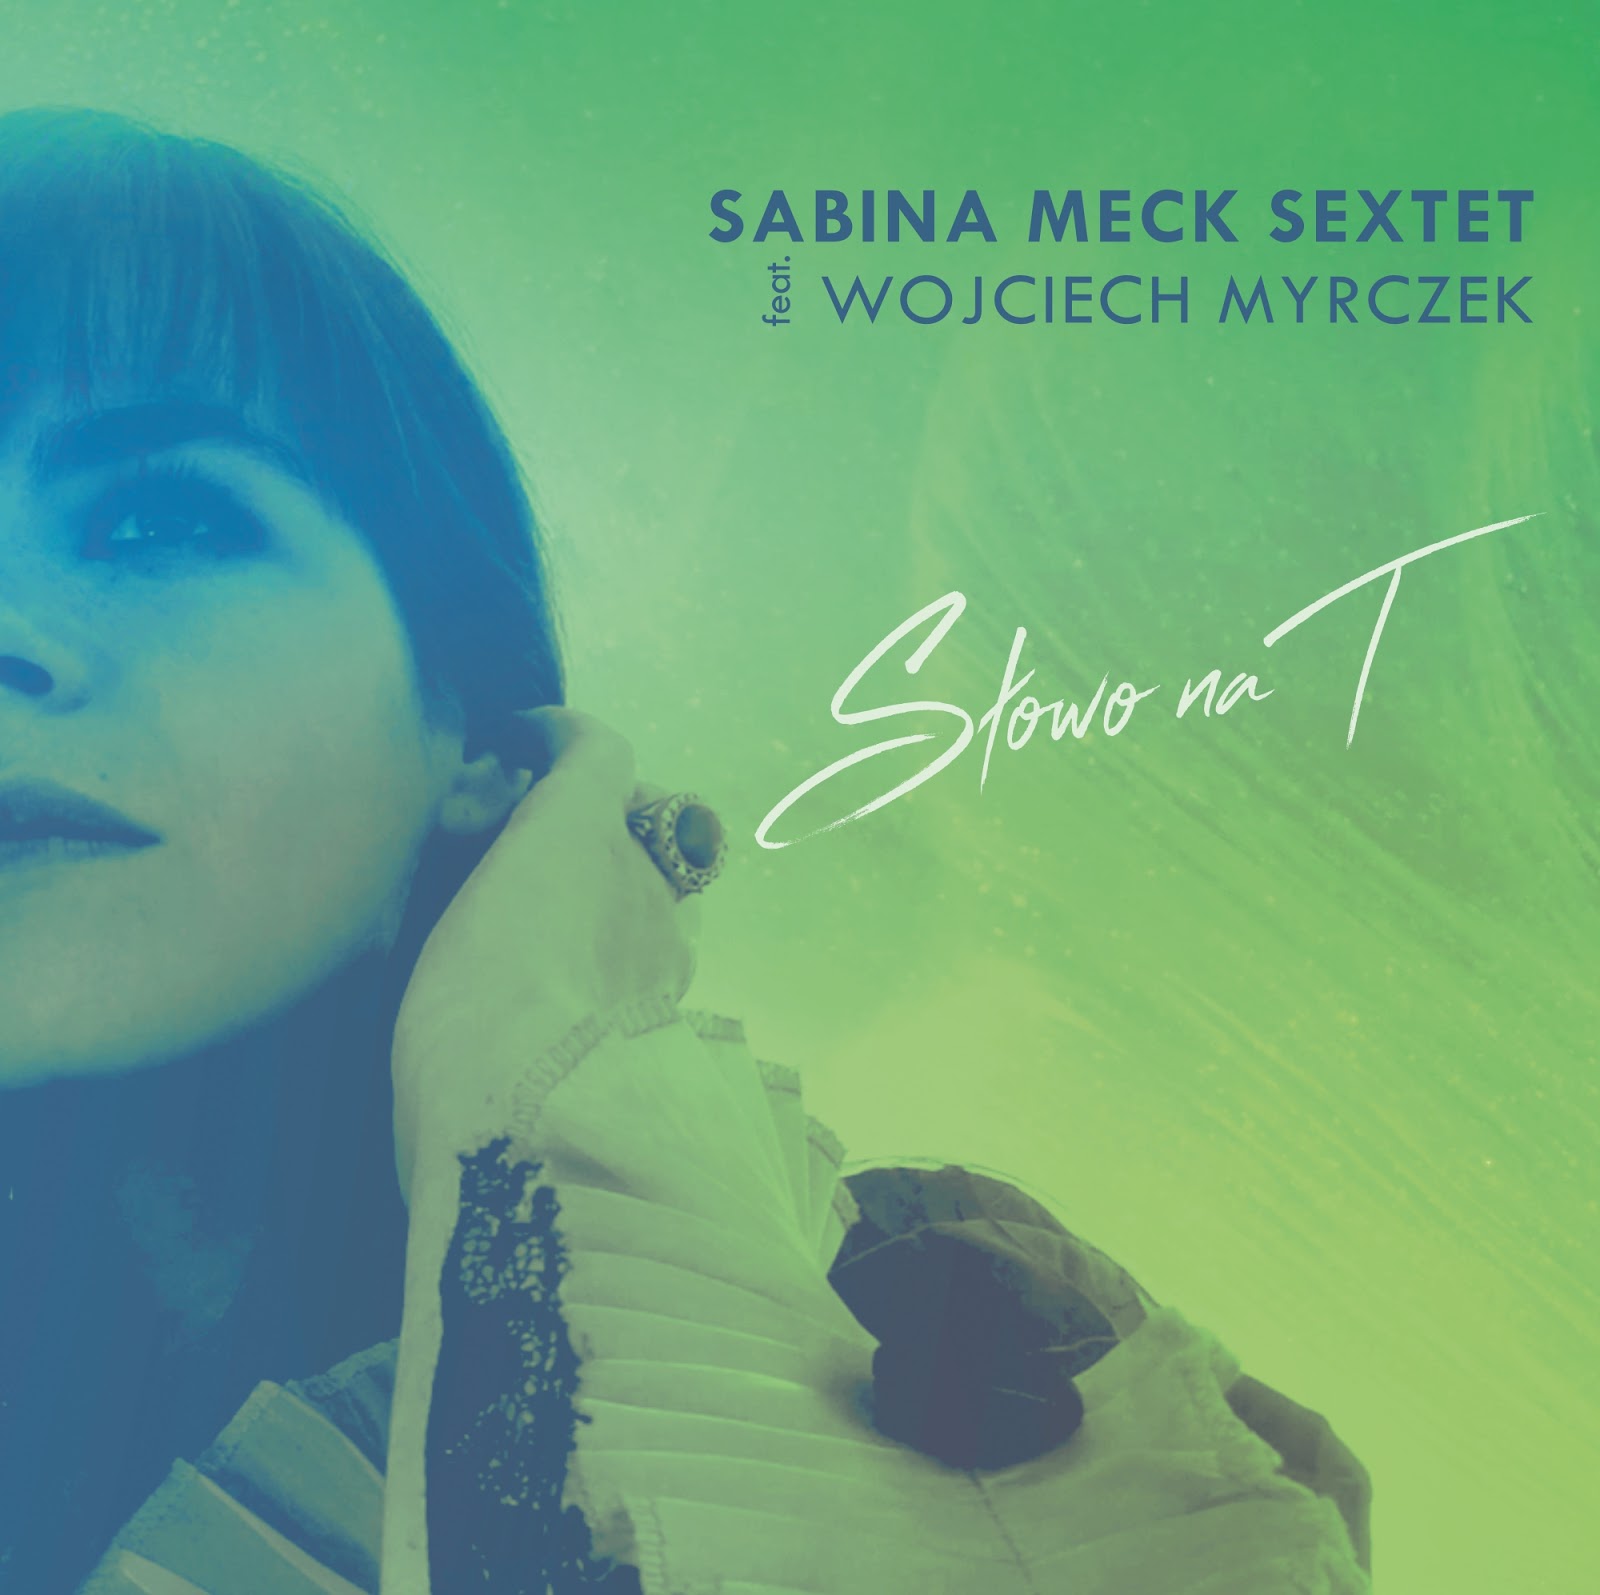 Sabina Meck Sextet feat. Wojciech Myrczek - Słowo na T